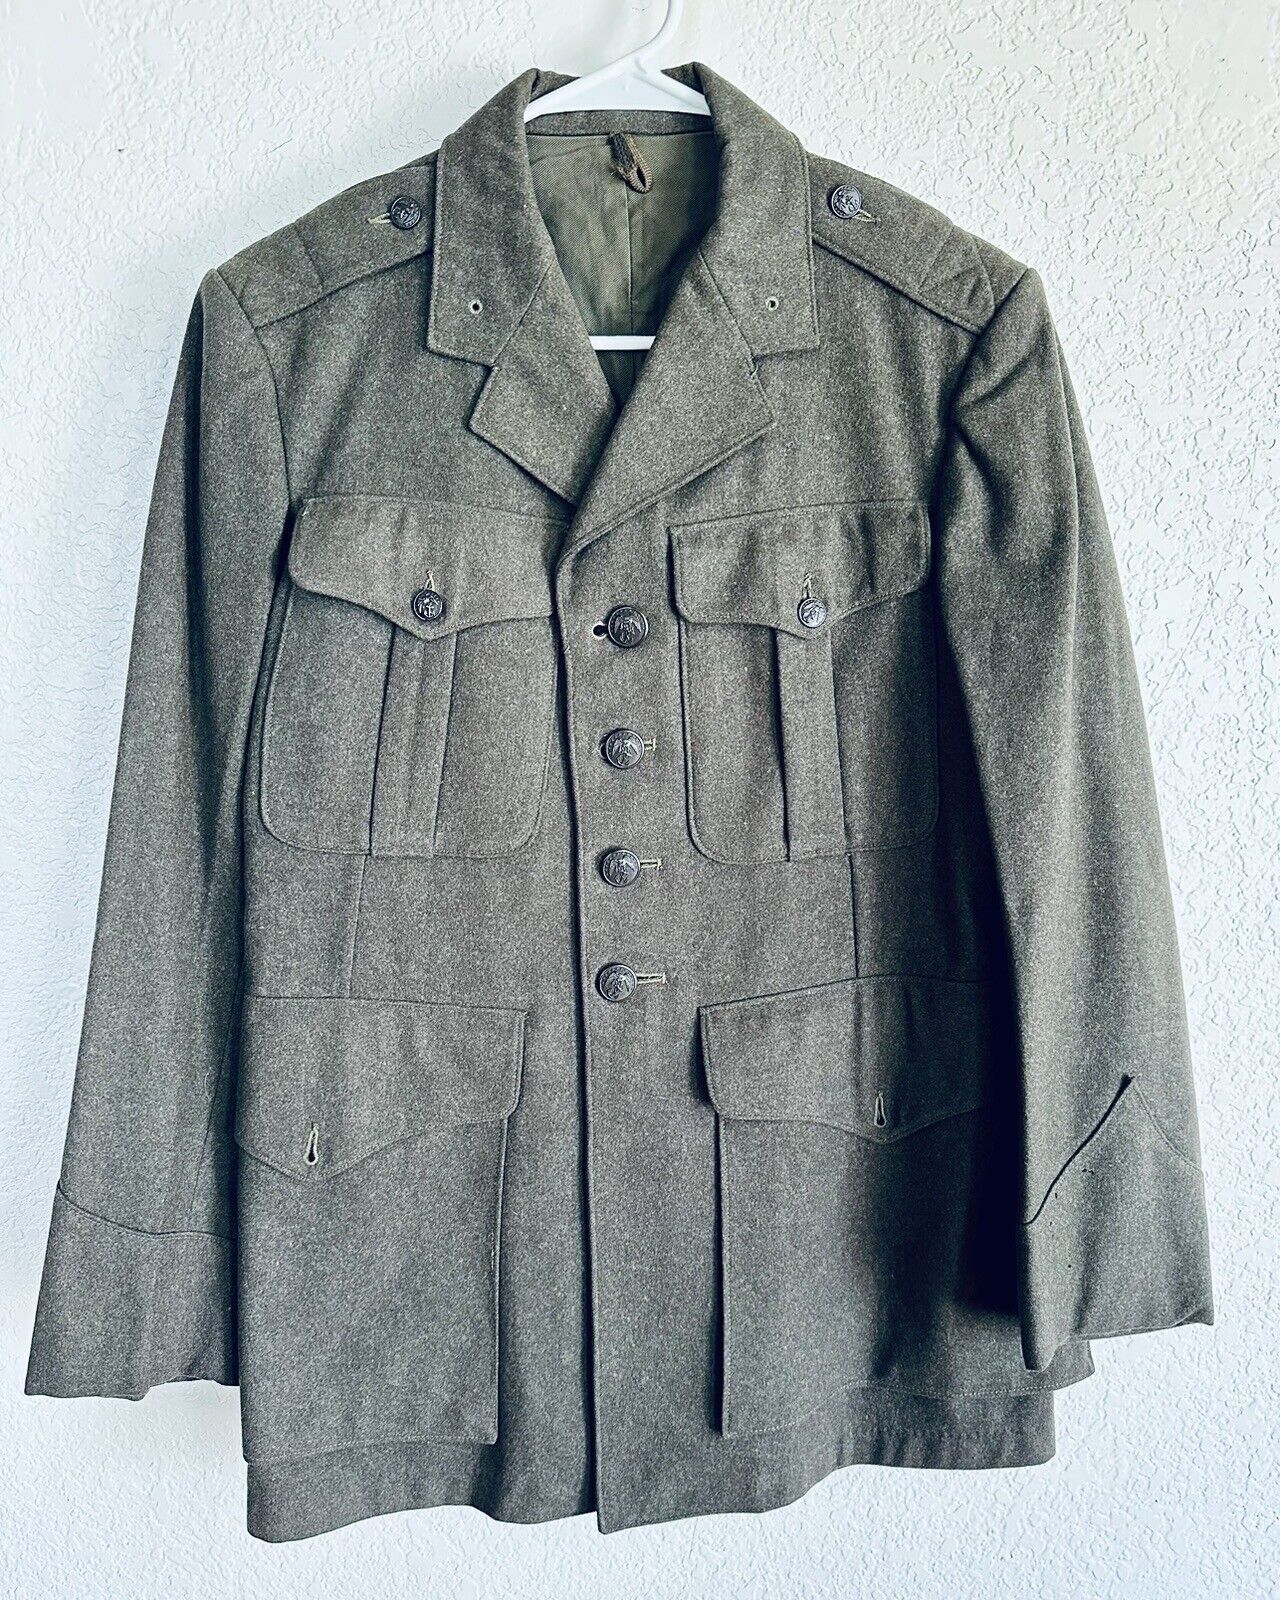 USMC Wool Greens Uniform Winter Service Jacket 36S (ISSUES) Named